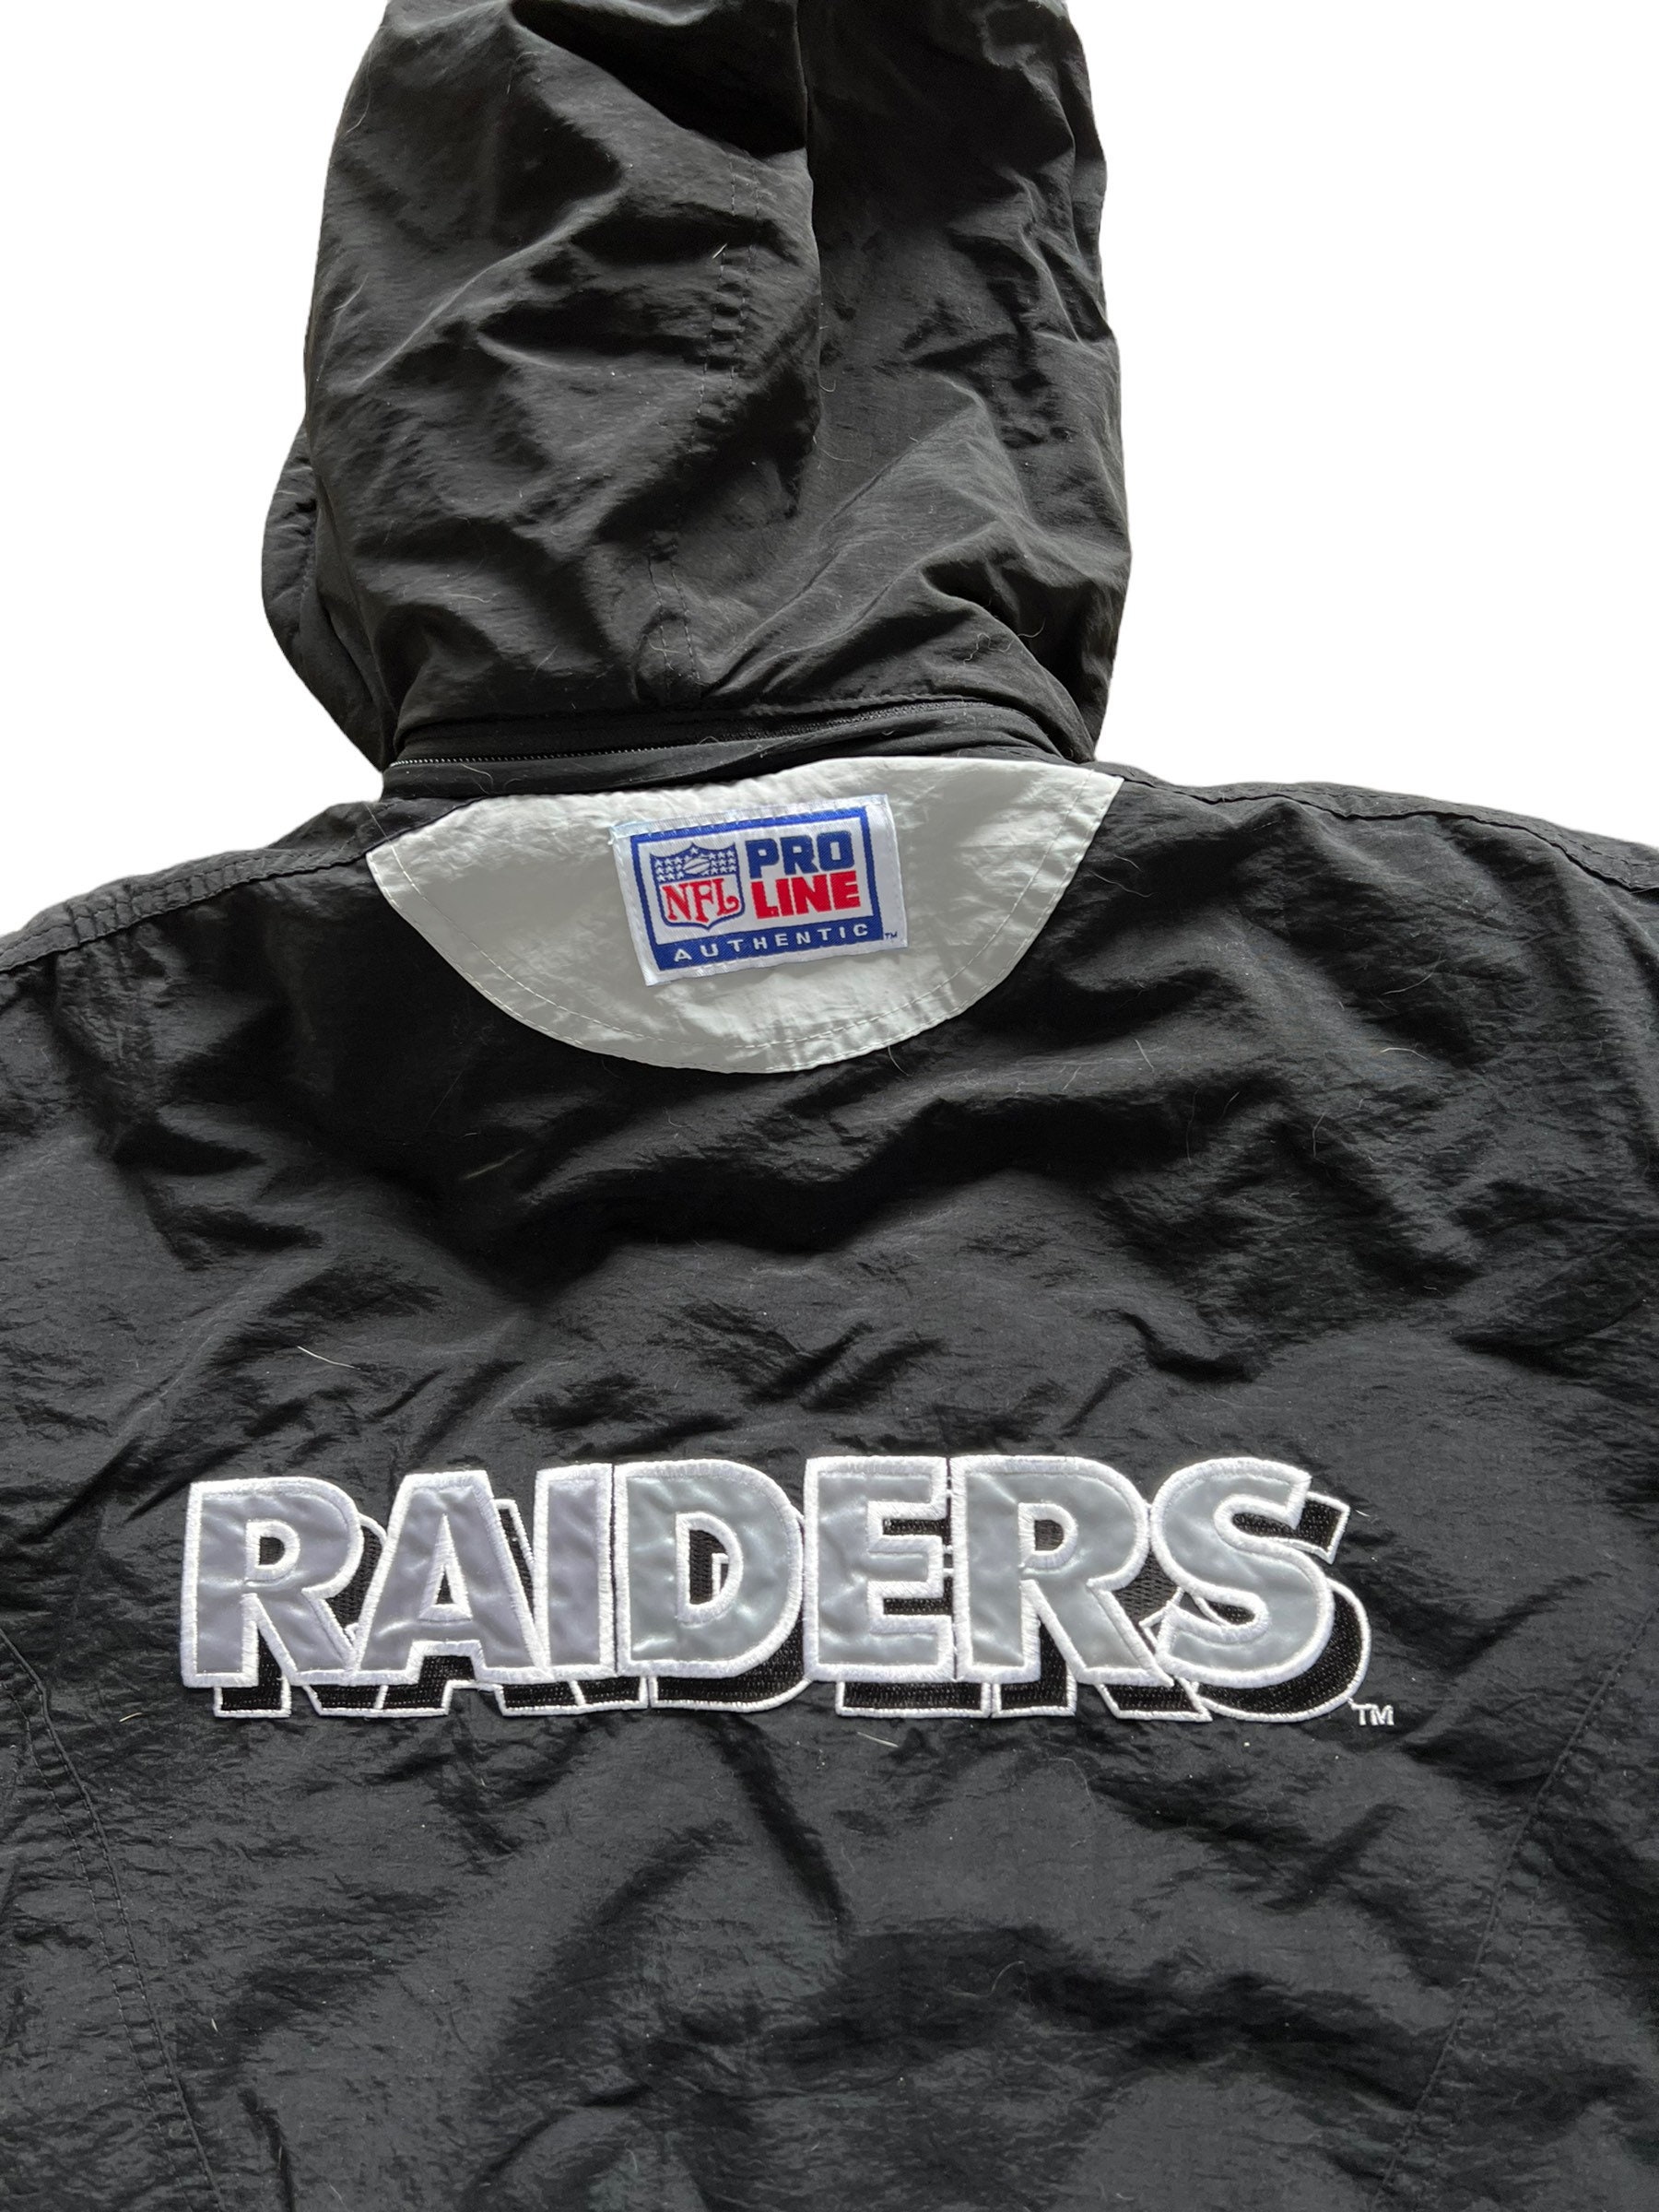 Black and Gray Starter Las Vegas Raiders Hooded Jacket - Jackets Masters